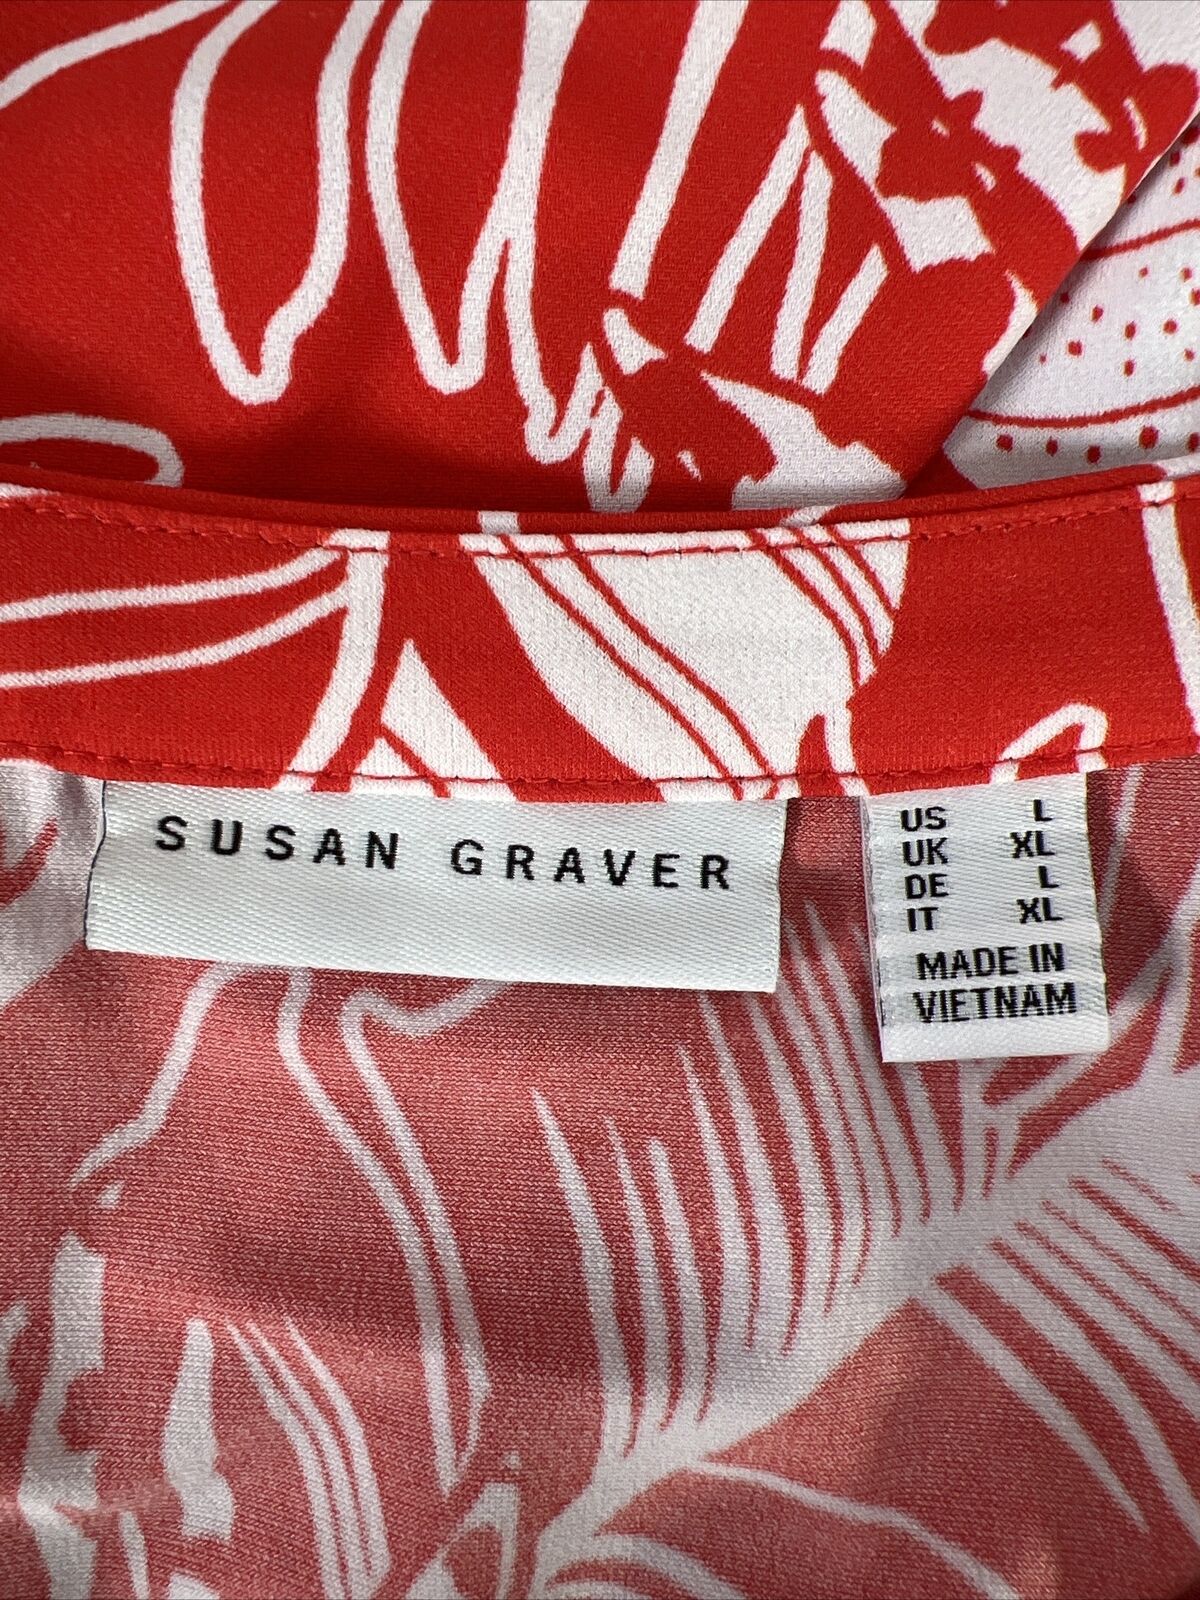 Susan Graver Blusa floral roja de manga larga con cuello en V para mujer - L